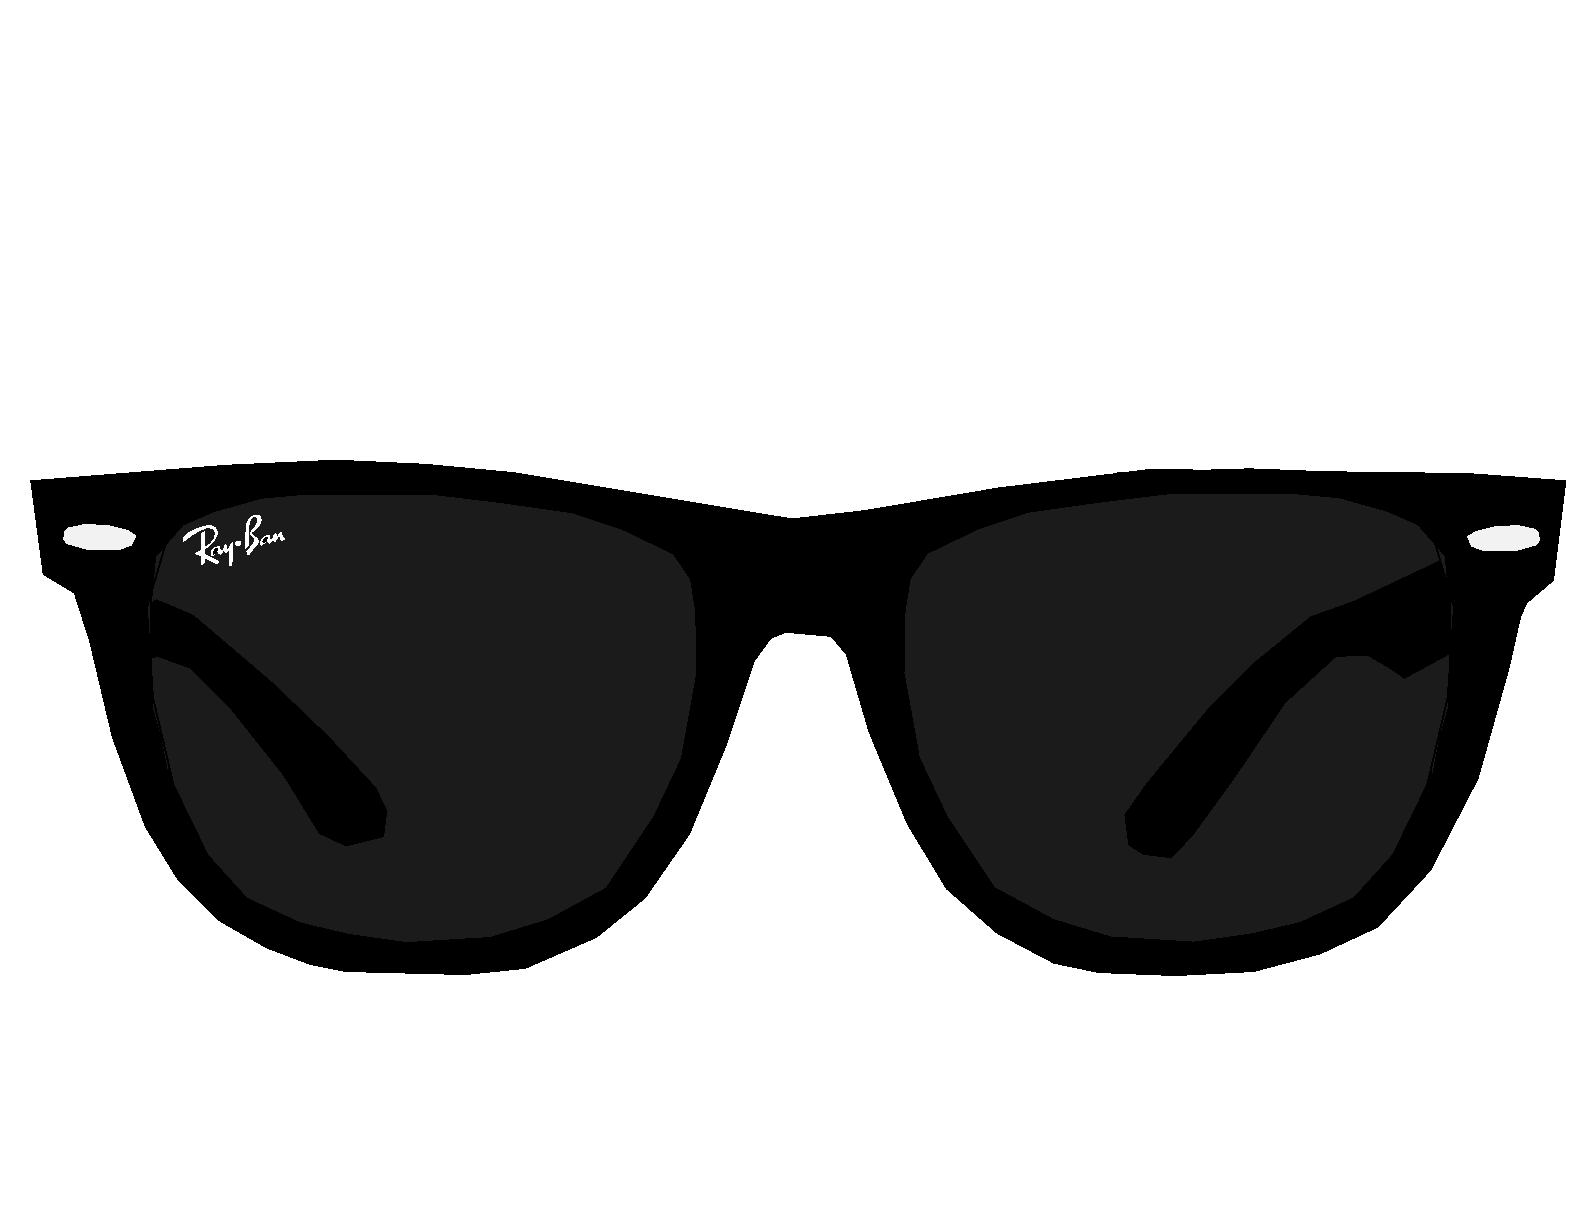 Sunglasses Glasses Png Image Clipart